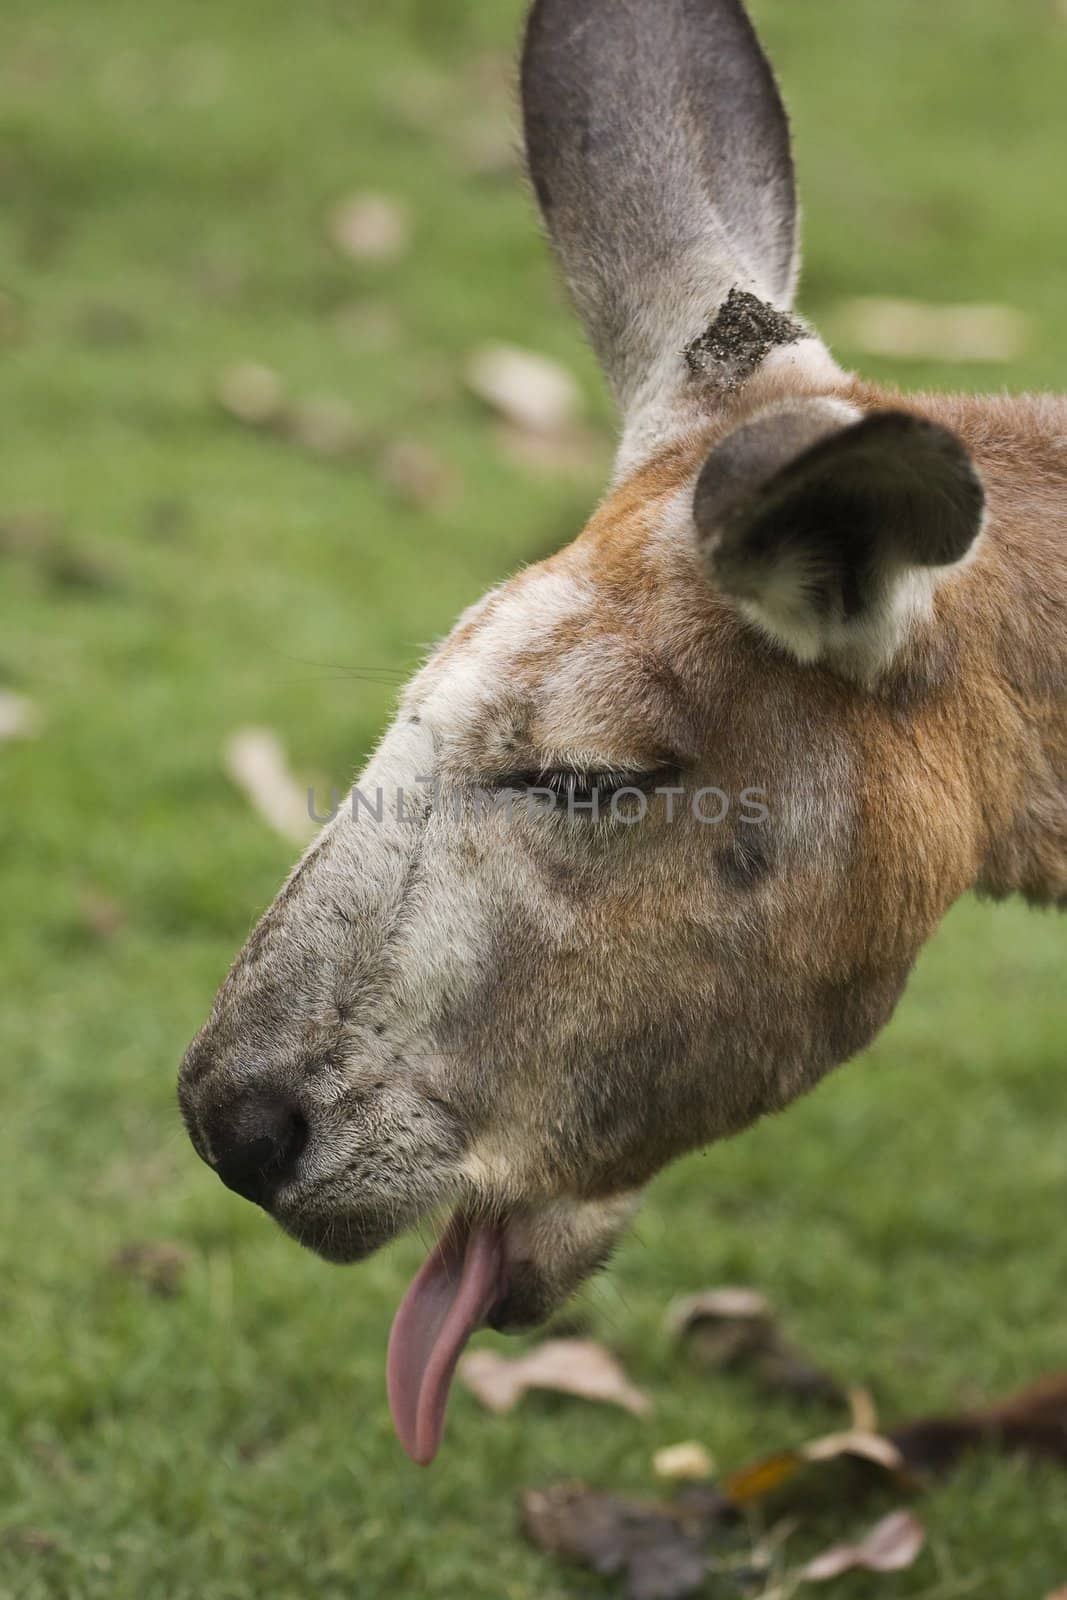 A kangaroo sticking its tongue out